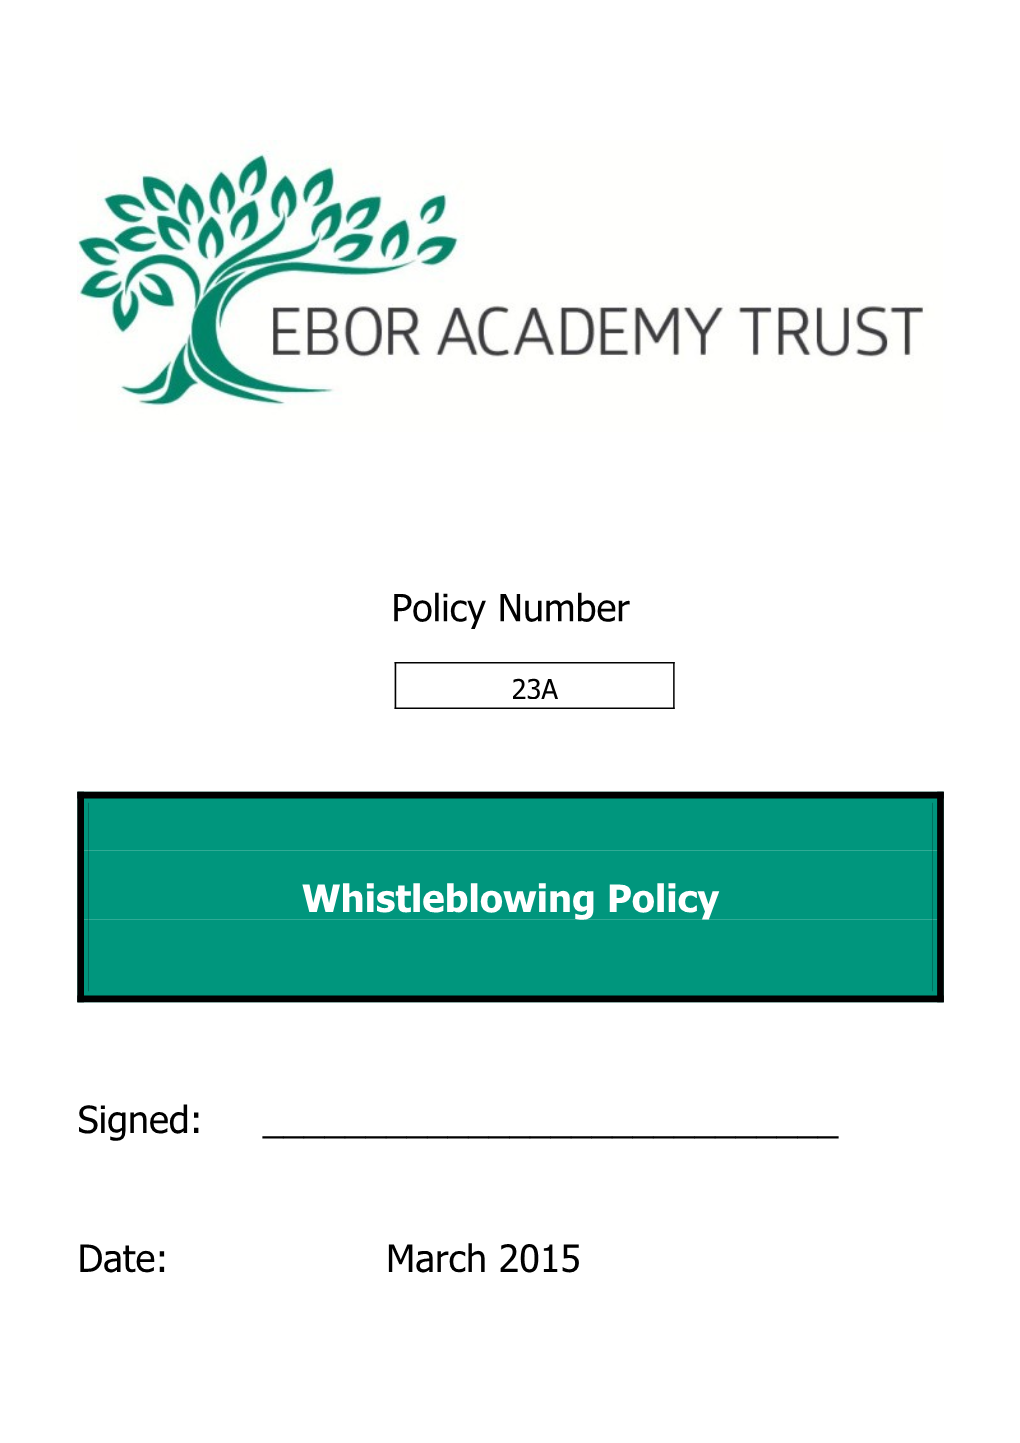 Ebor Academy Trust Whistleblowing Policy